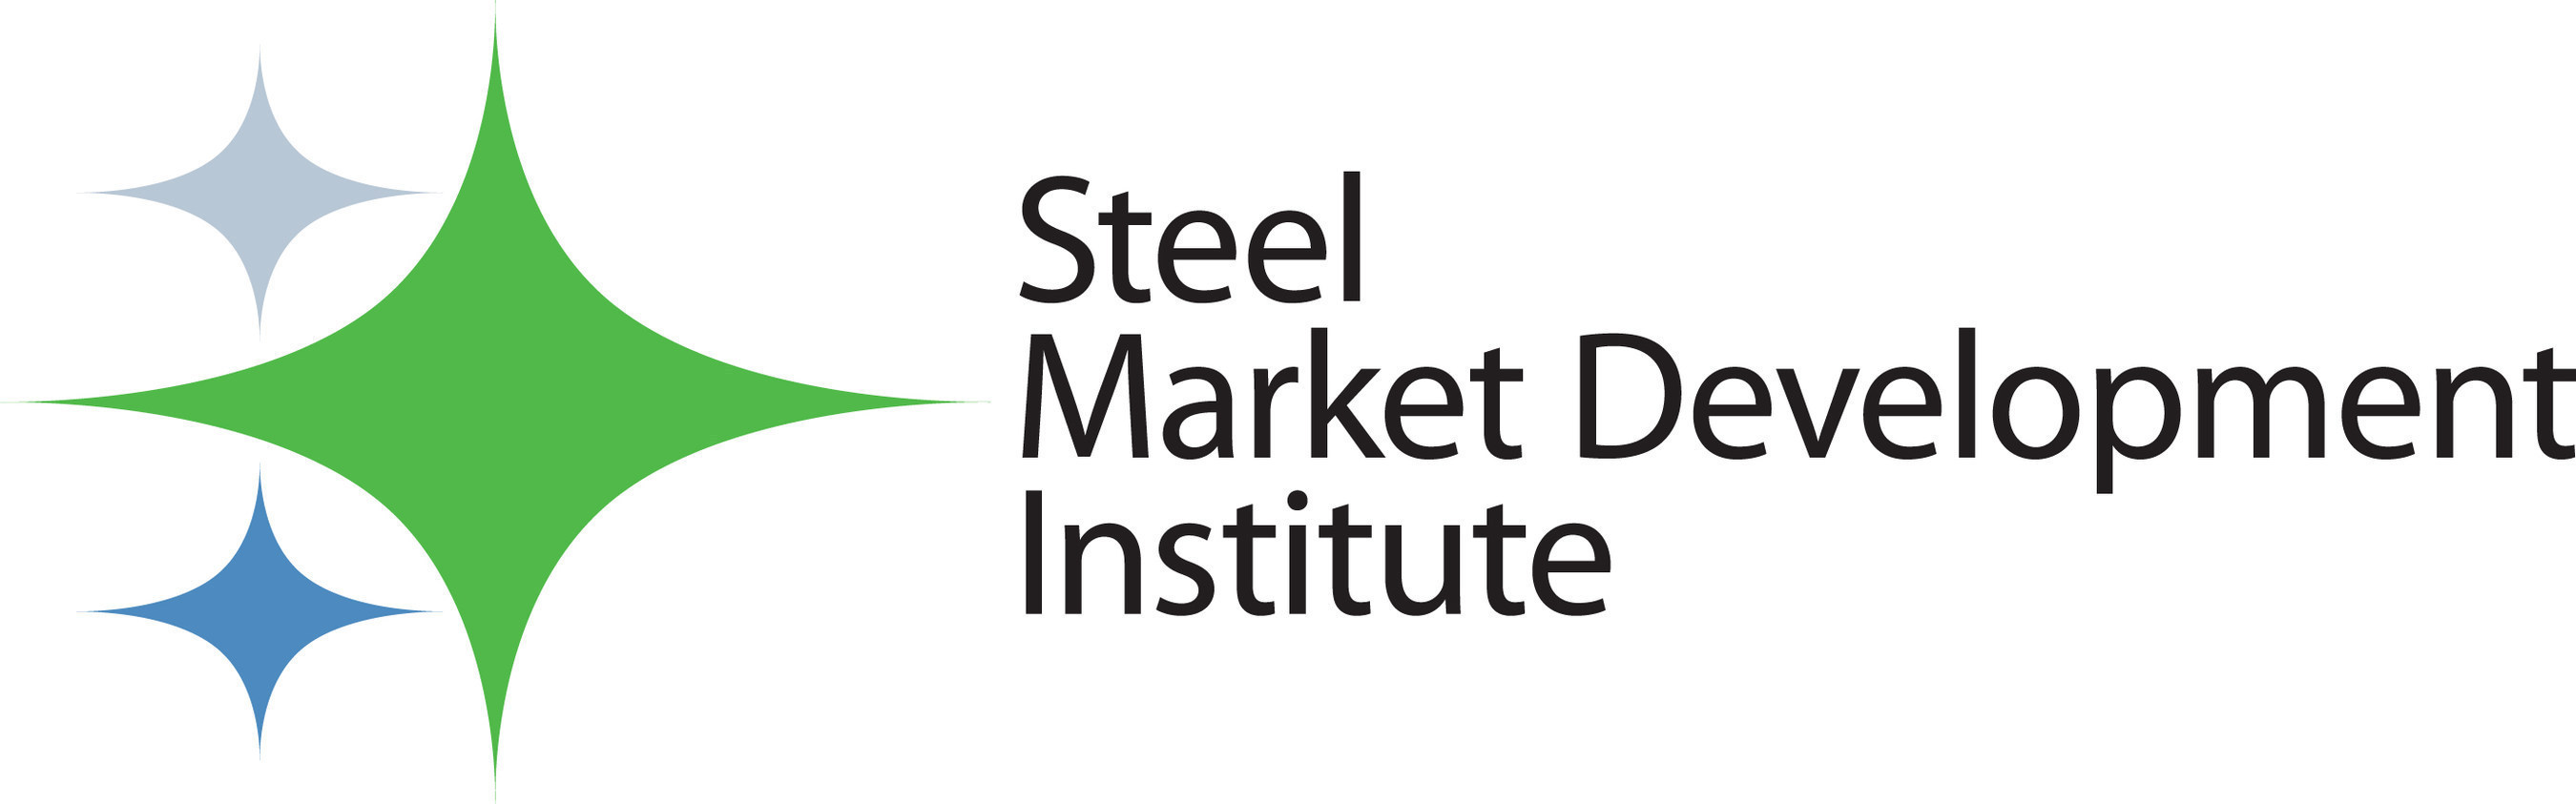 Steel Market Development Institute